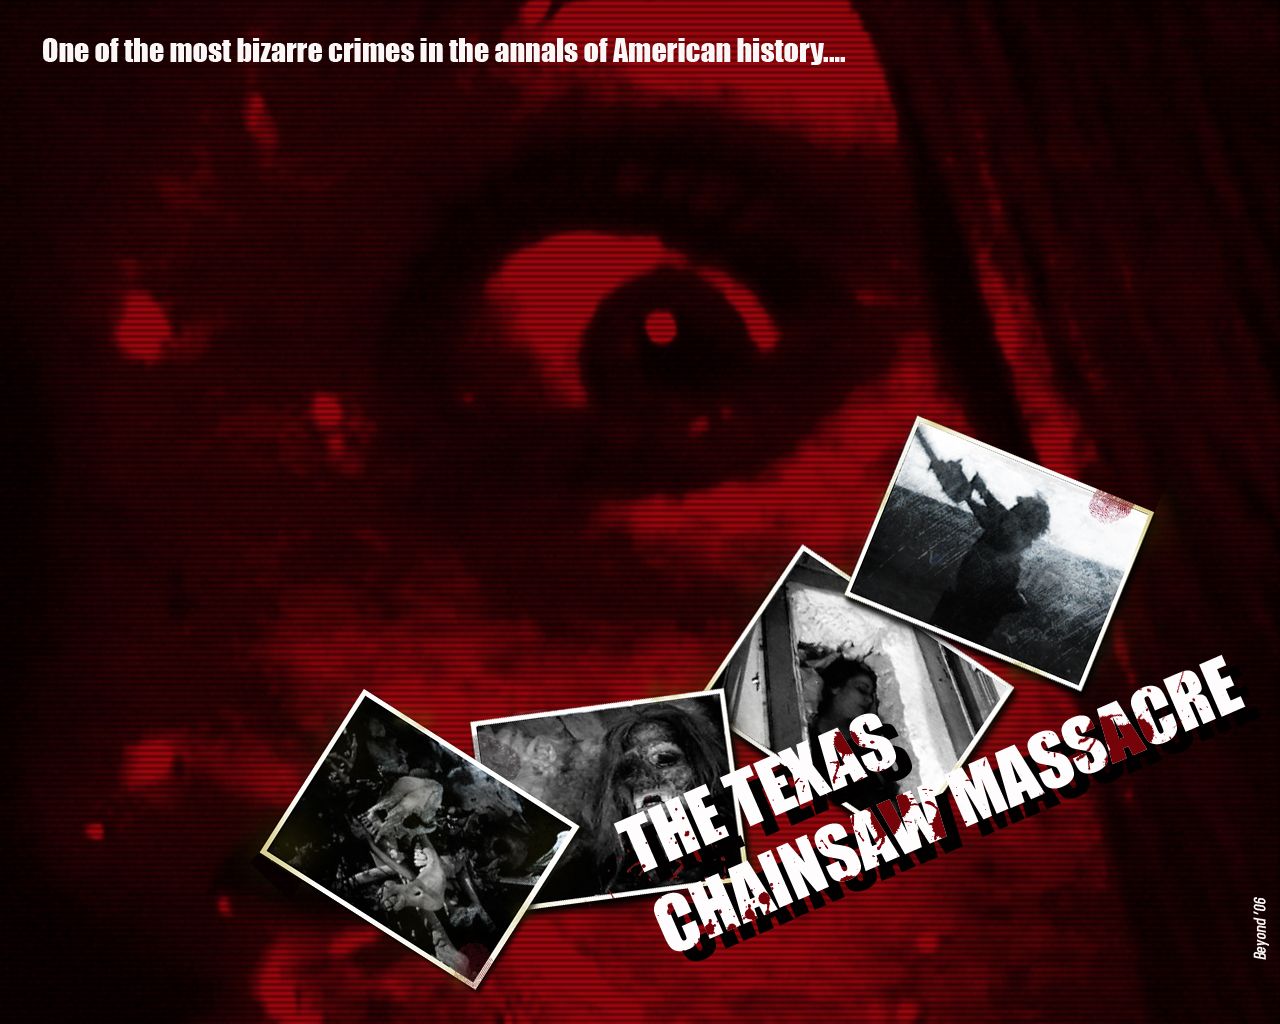 Texas Chainsaw Massacre - 70s Horror Wallpaper (26682514) - Fanpop